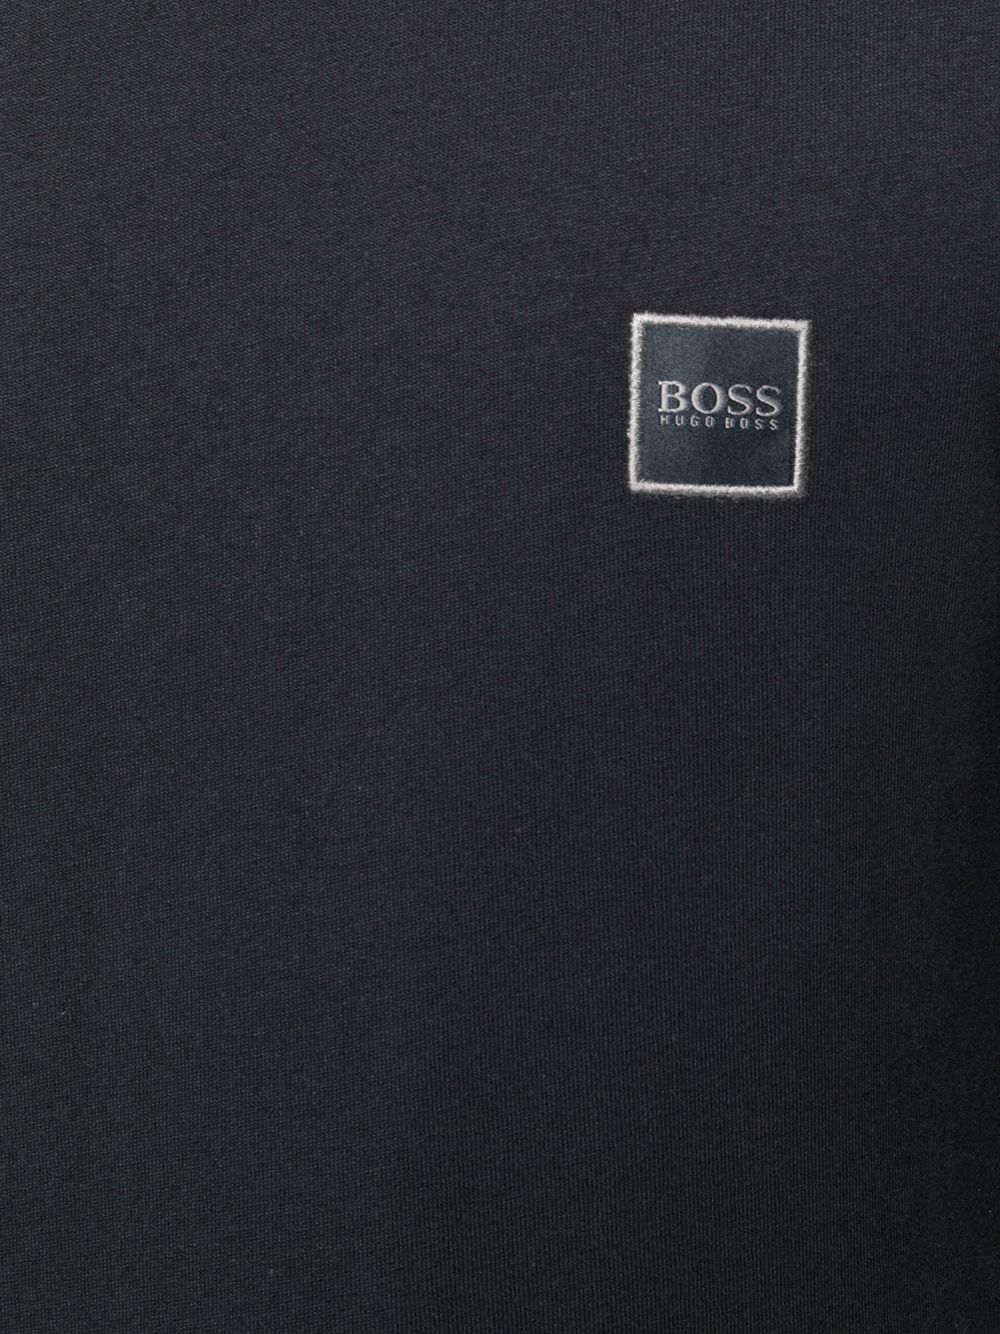 фото Boss топ с заплаткой с логотипом